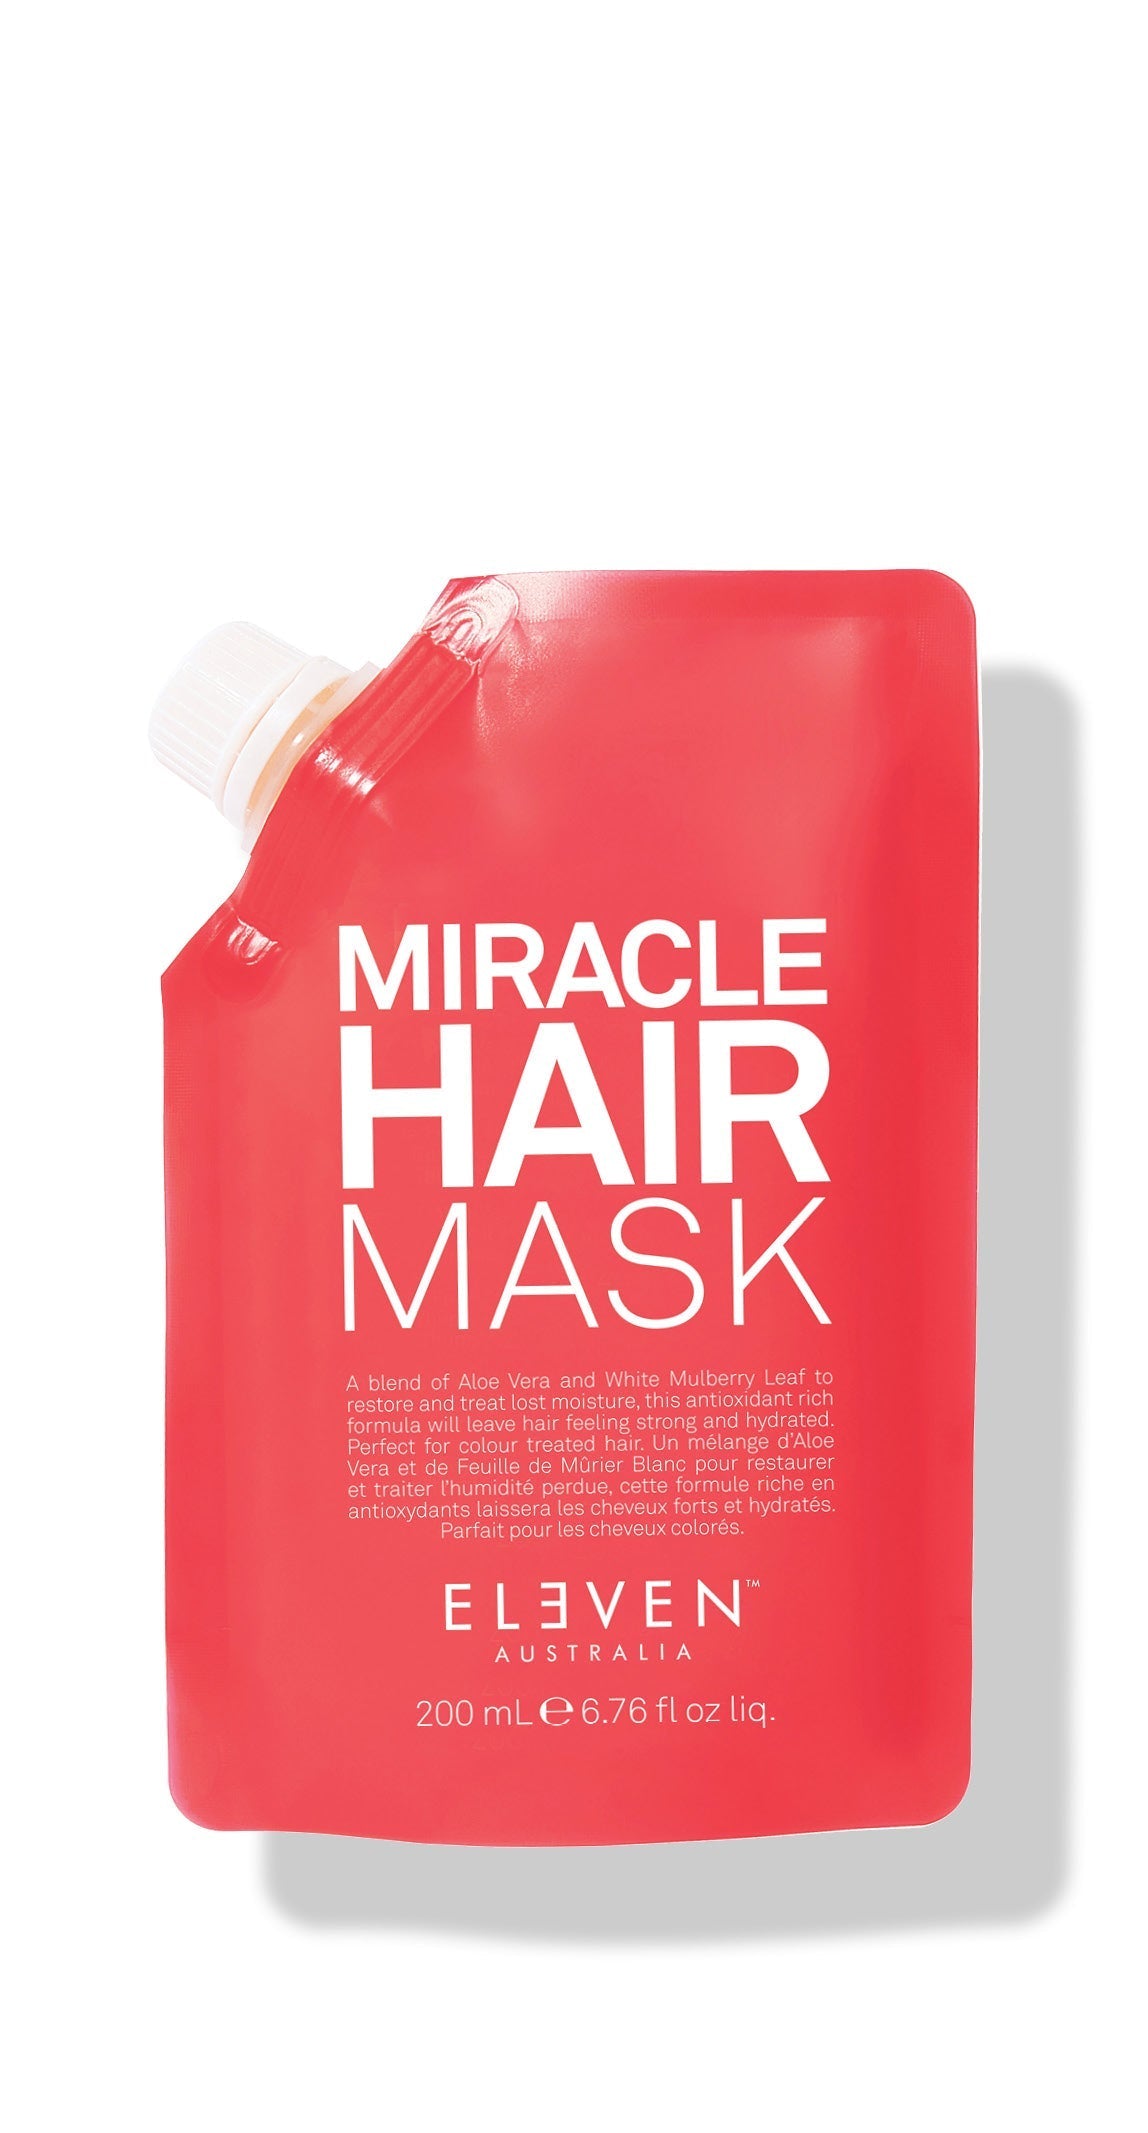 Miracle Hair Mask - 200ml - ELEVEN Australia